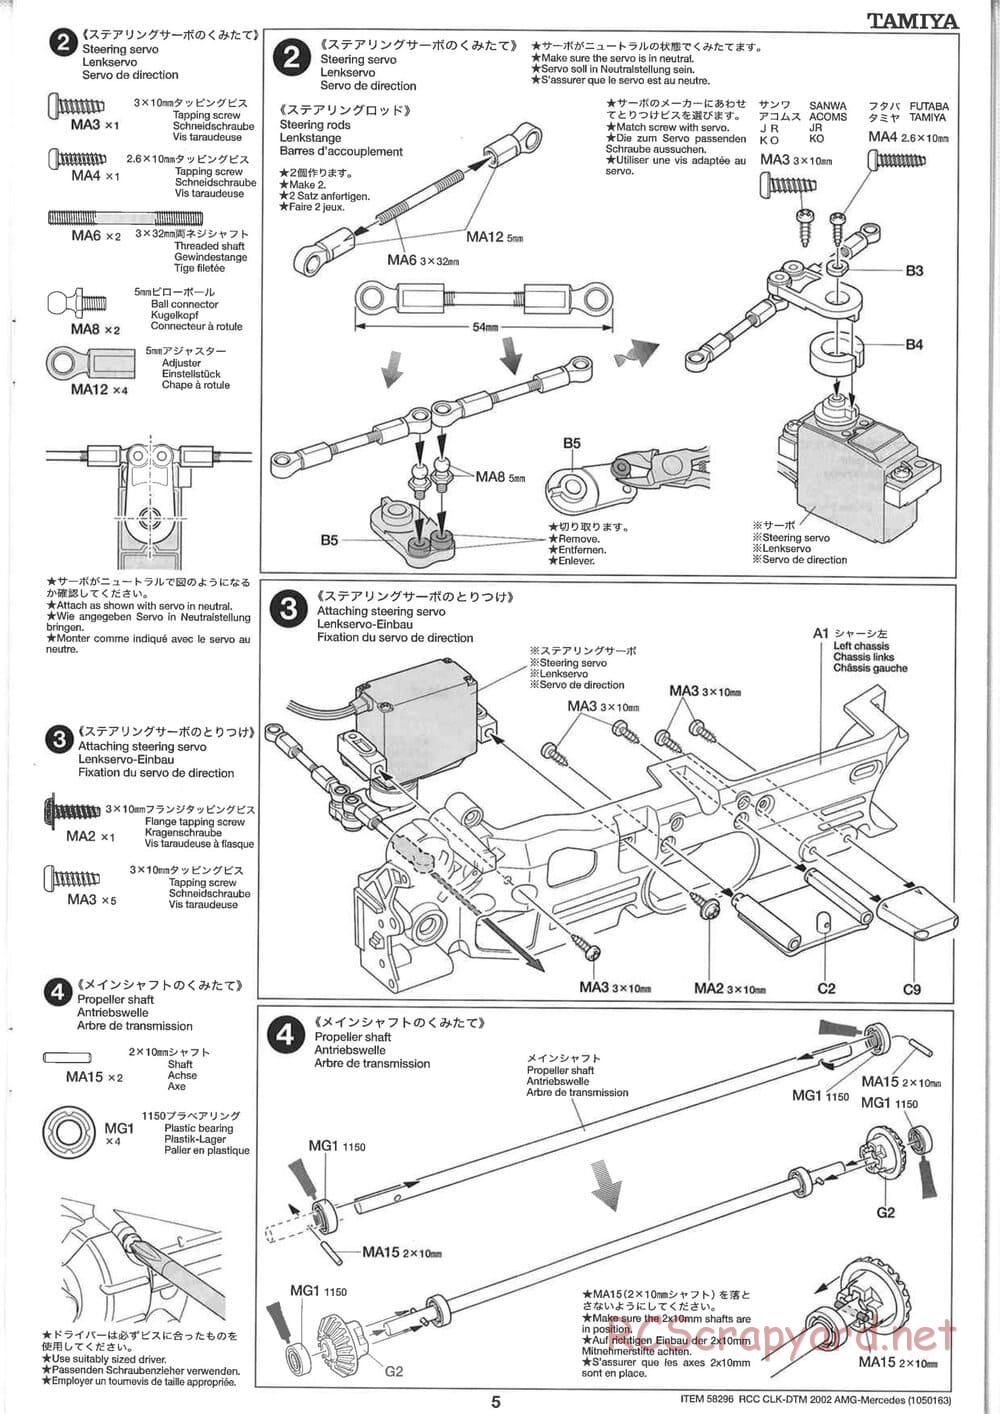 Tamiya - CLK DTM 2002 AMG Mercedes - TL-01 LA Chassis - Manual - Page 5